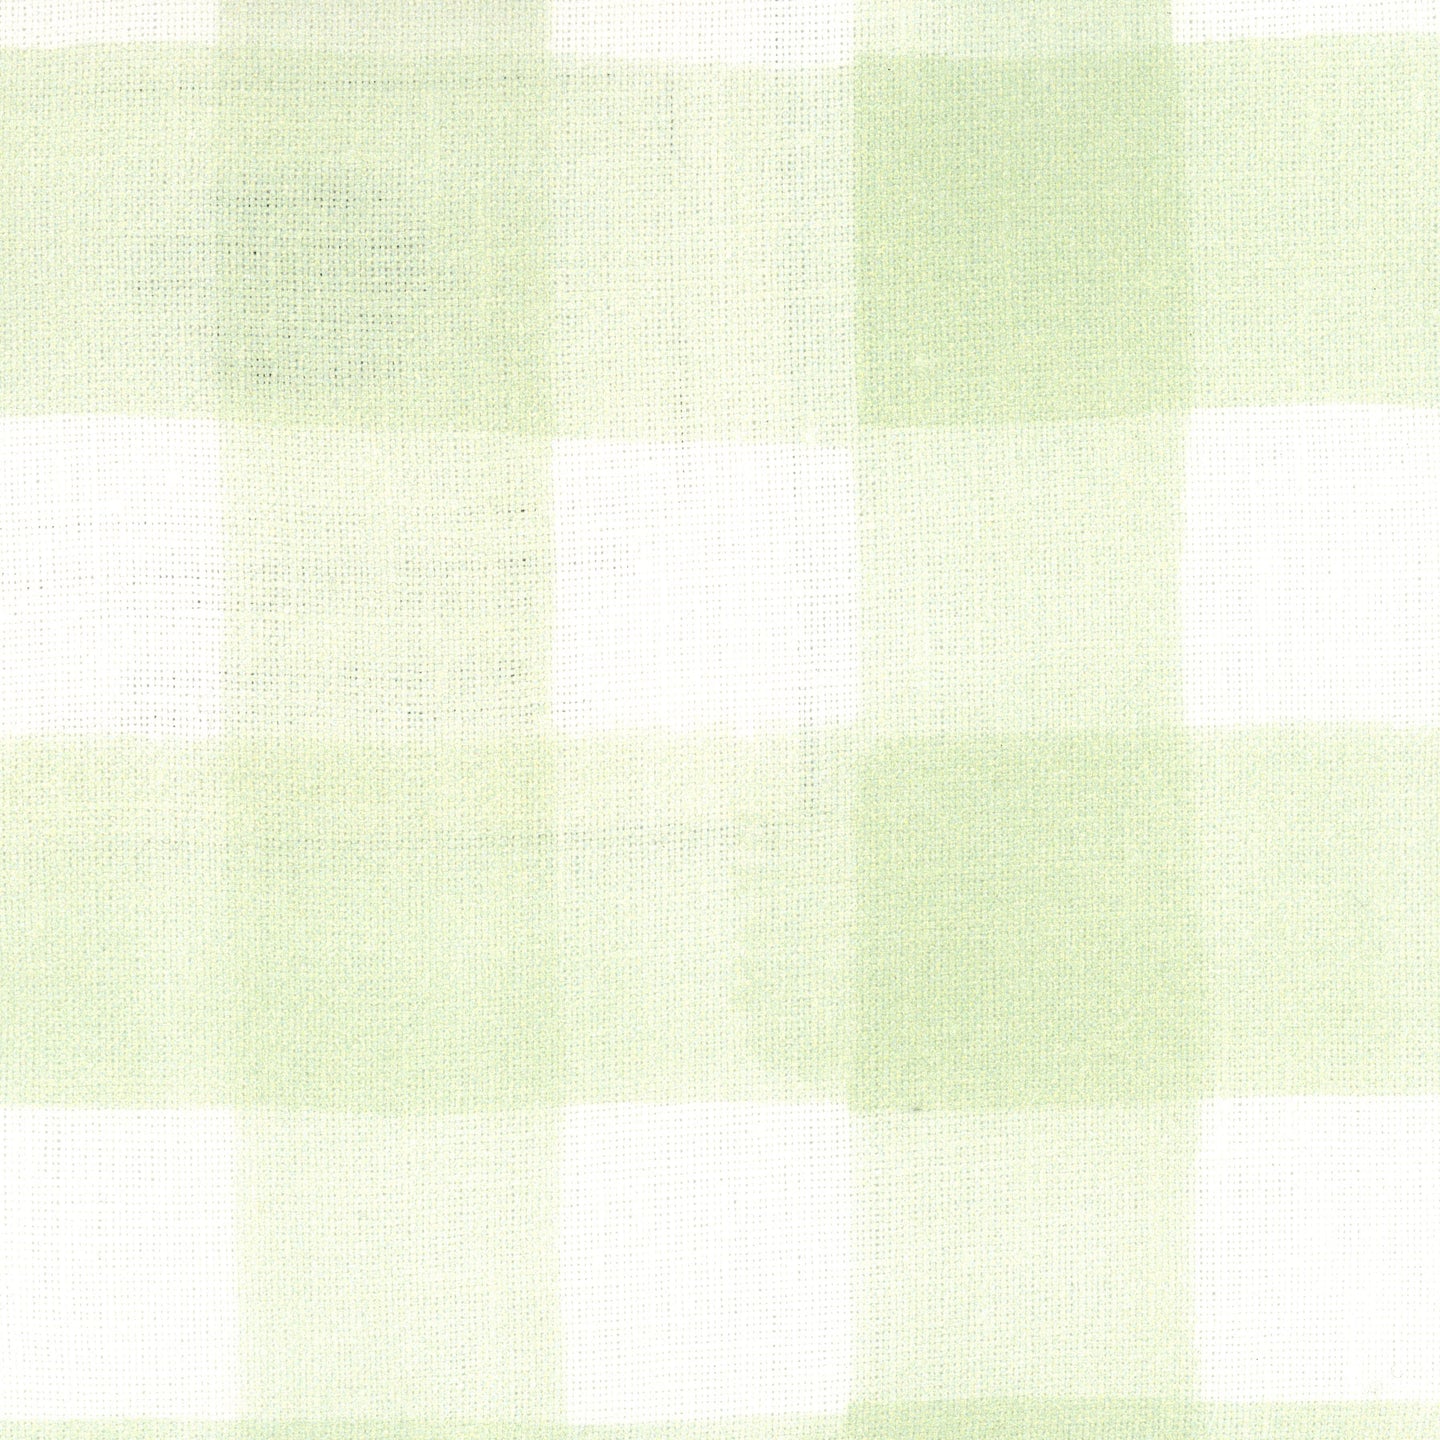 Picnic - Grass Fabric